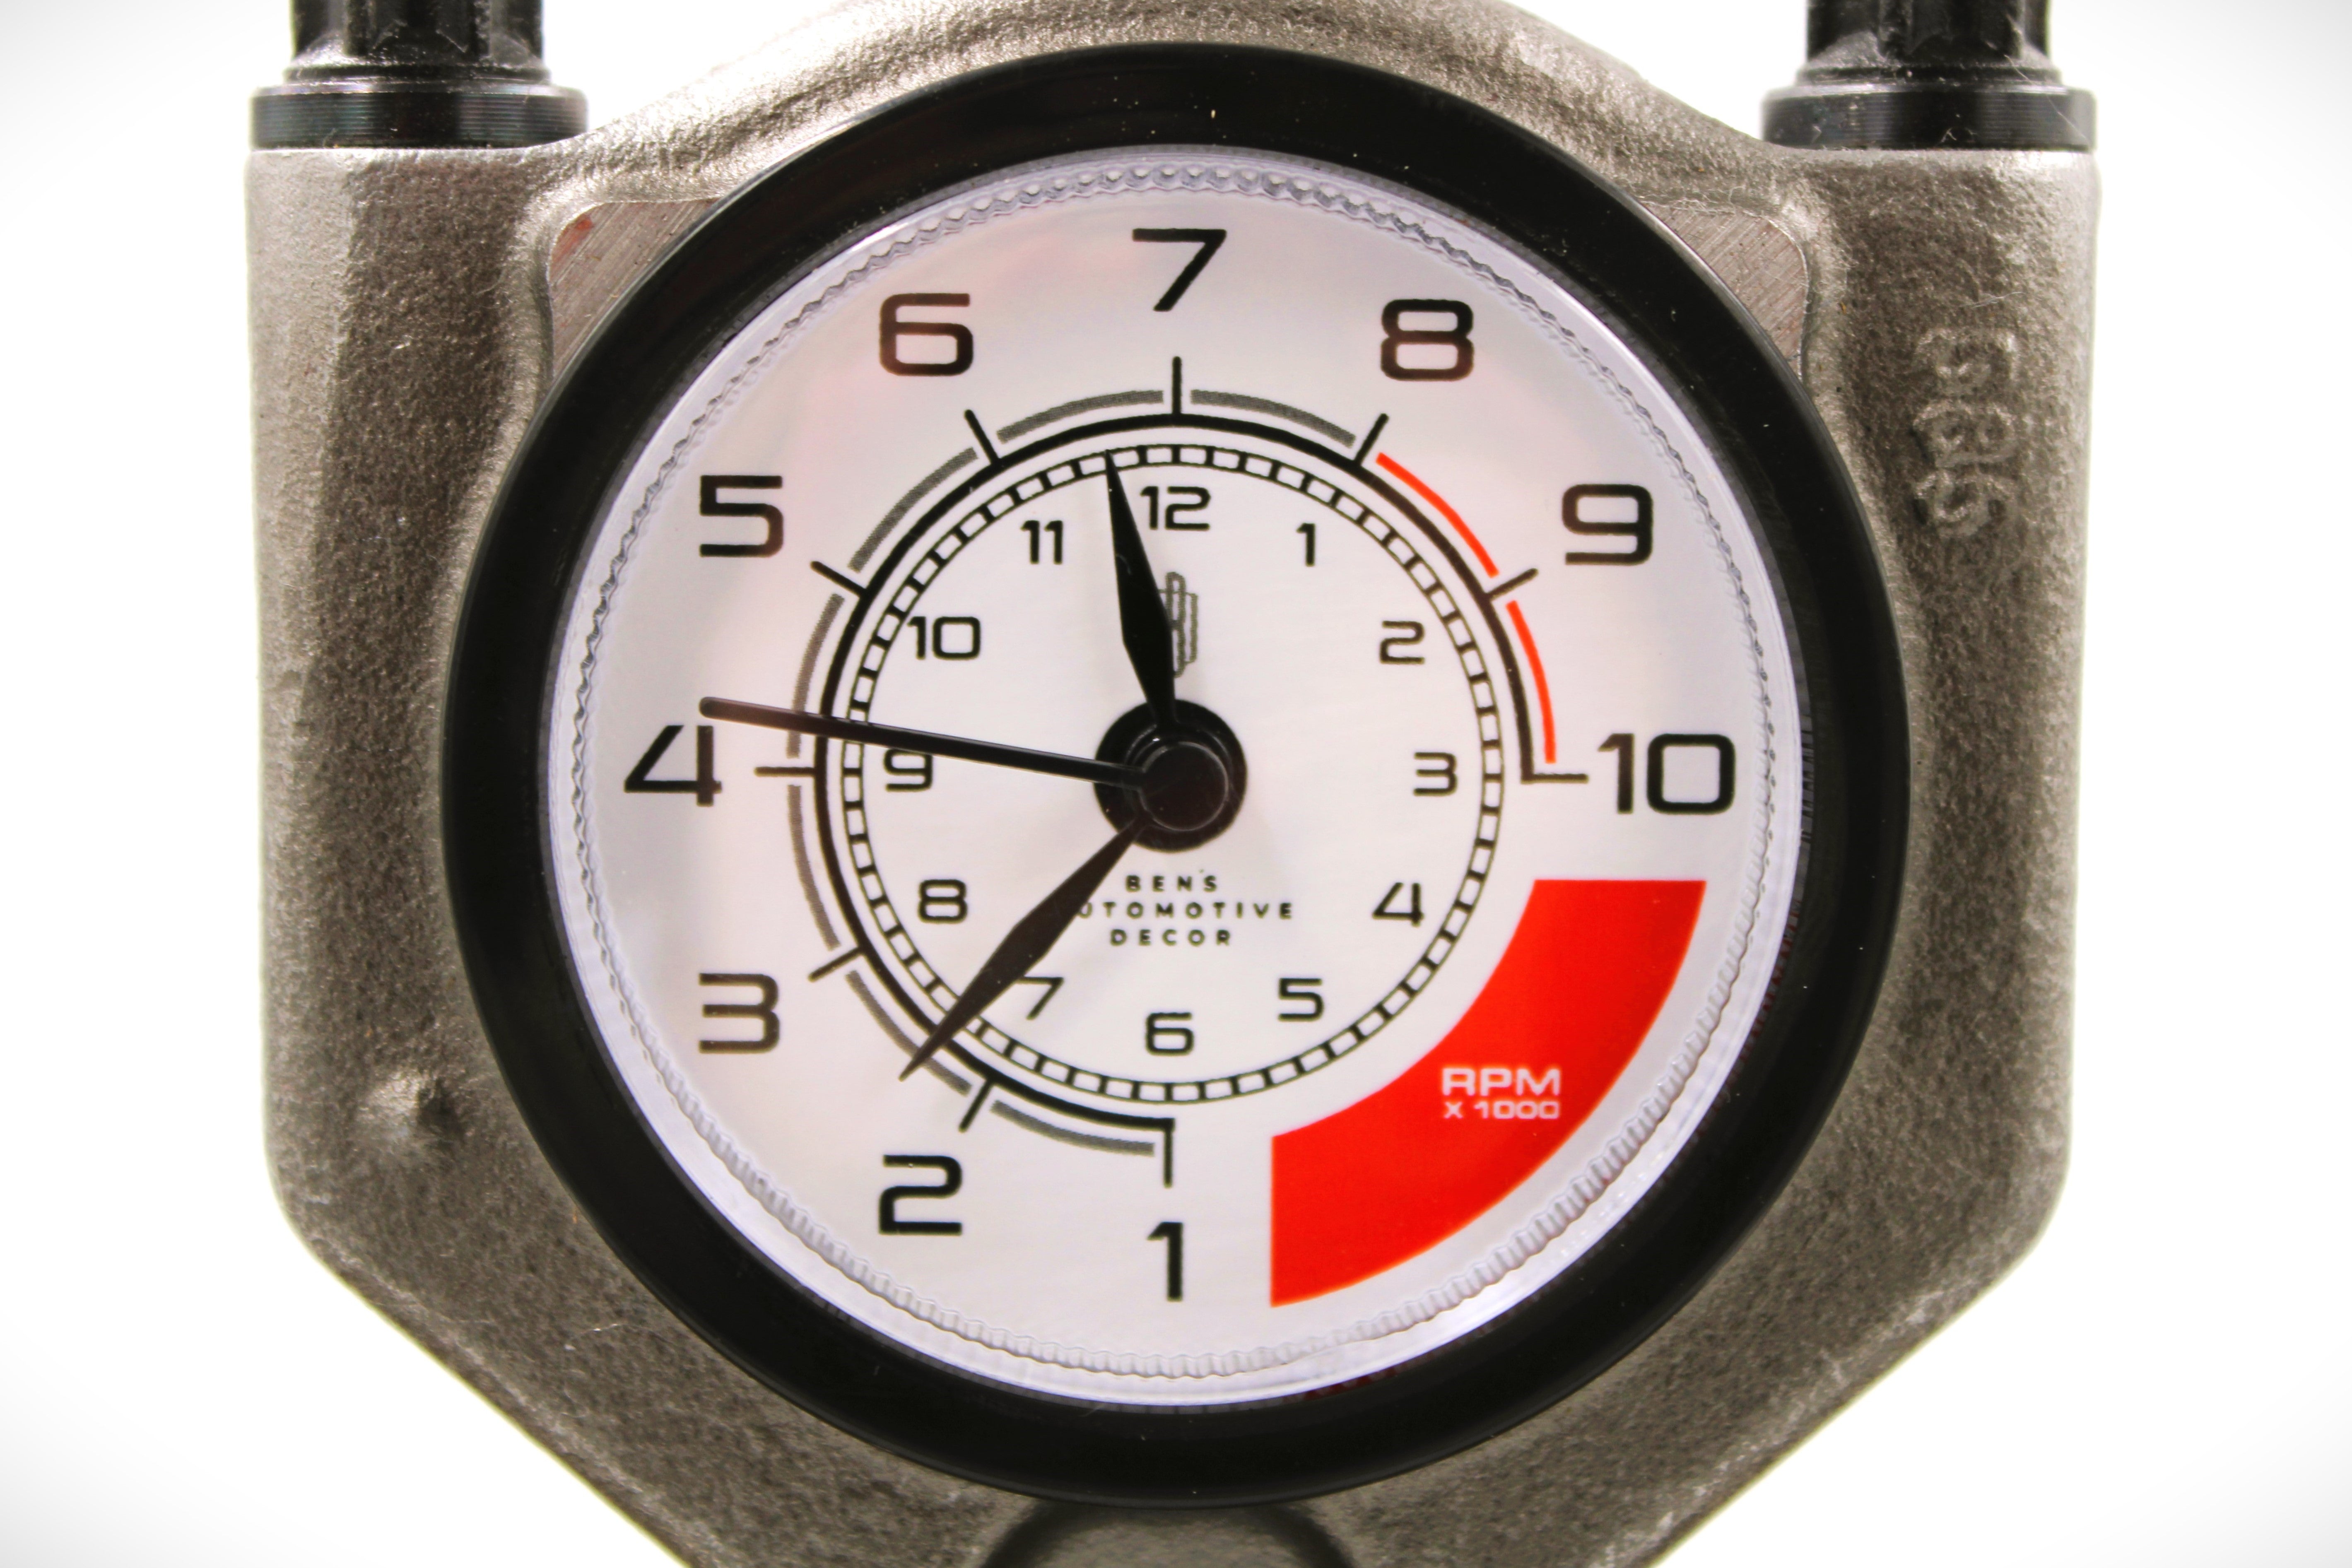 Piston Clock with White RPM Gauge Face - Unique Car Enthusiast Gift, Steampunk Clock for Gearheads, Automotive Decor